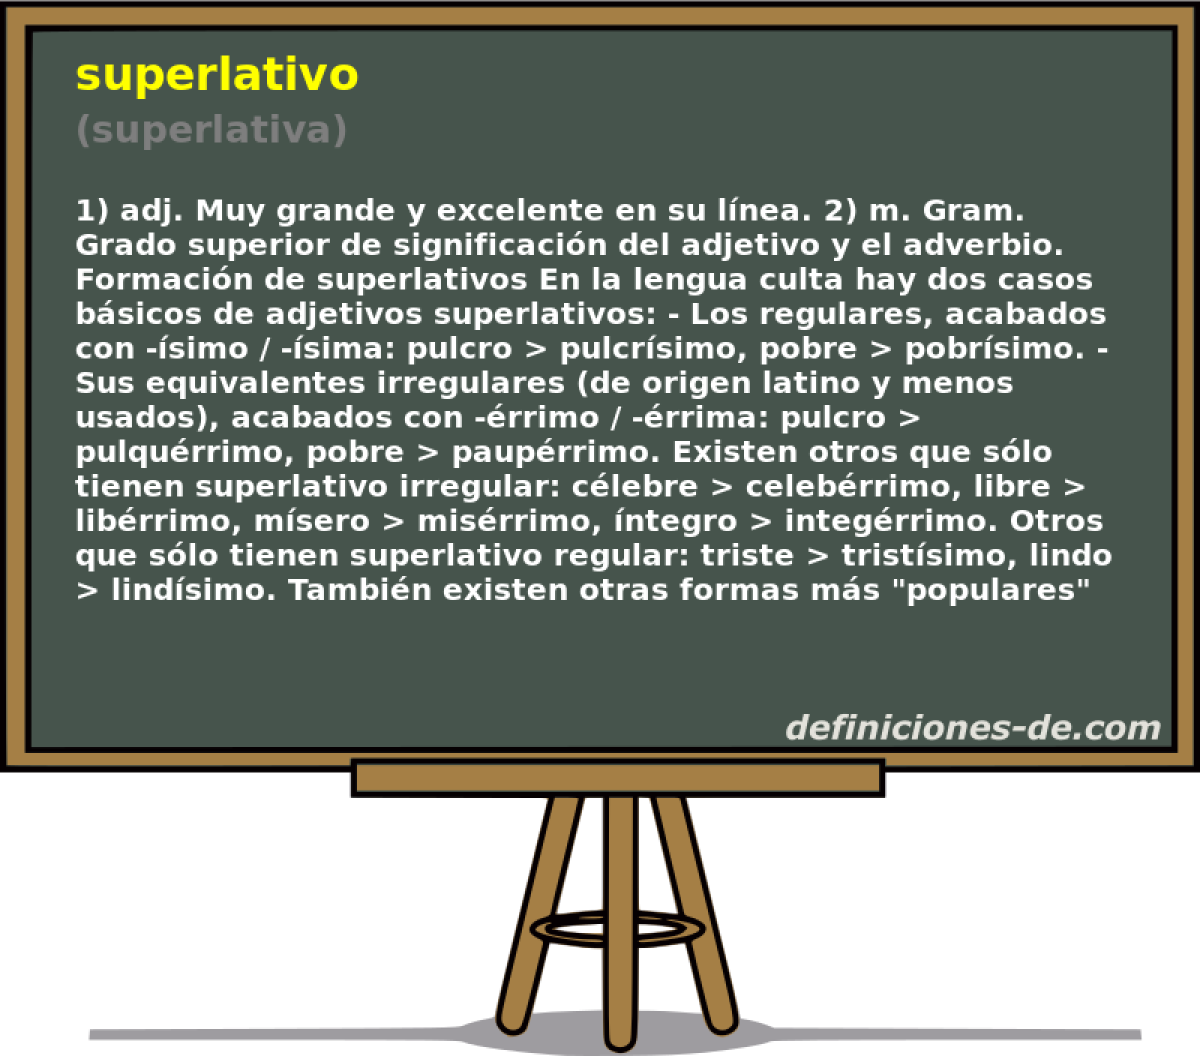 superlativo (superlativa)